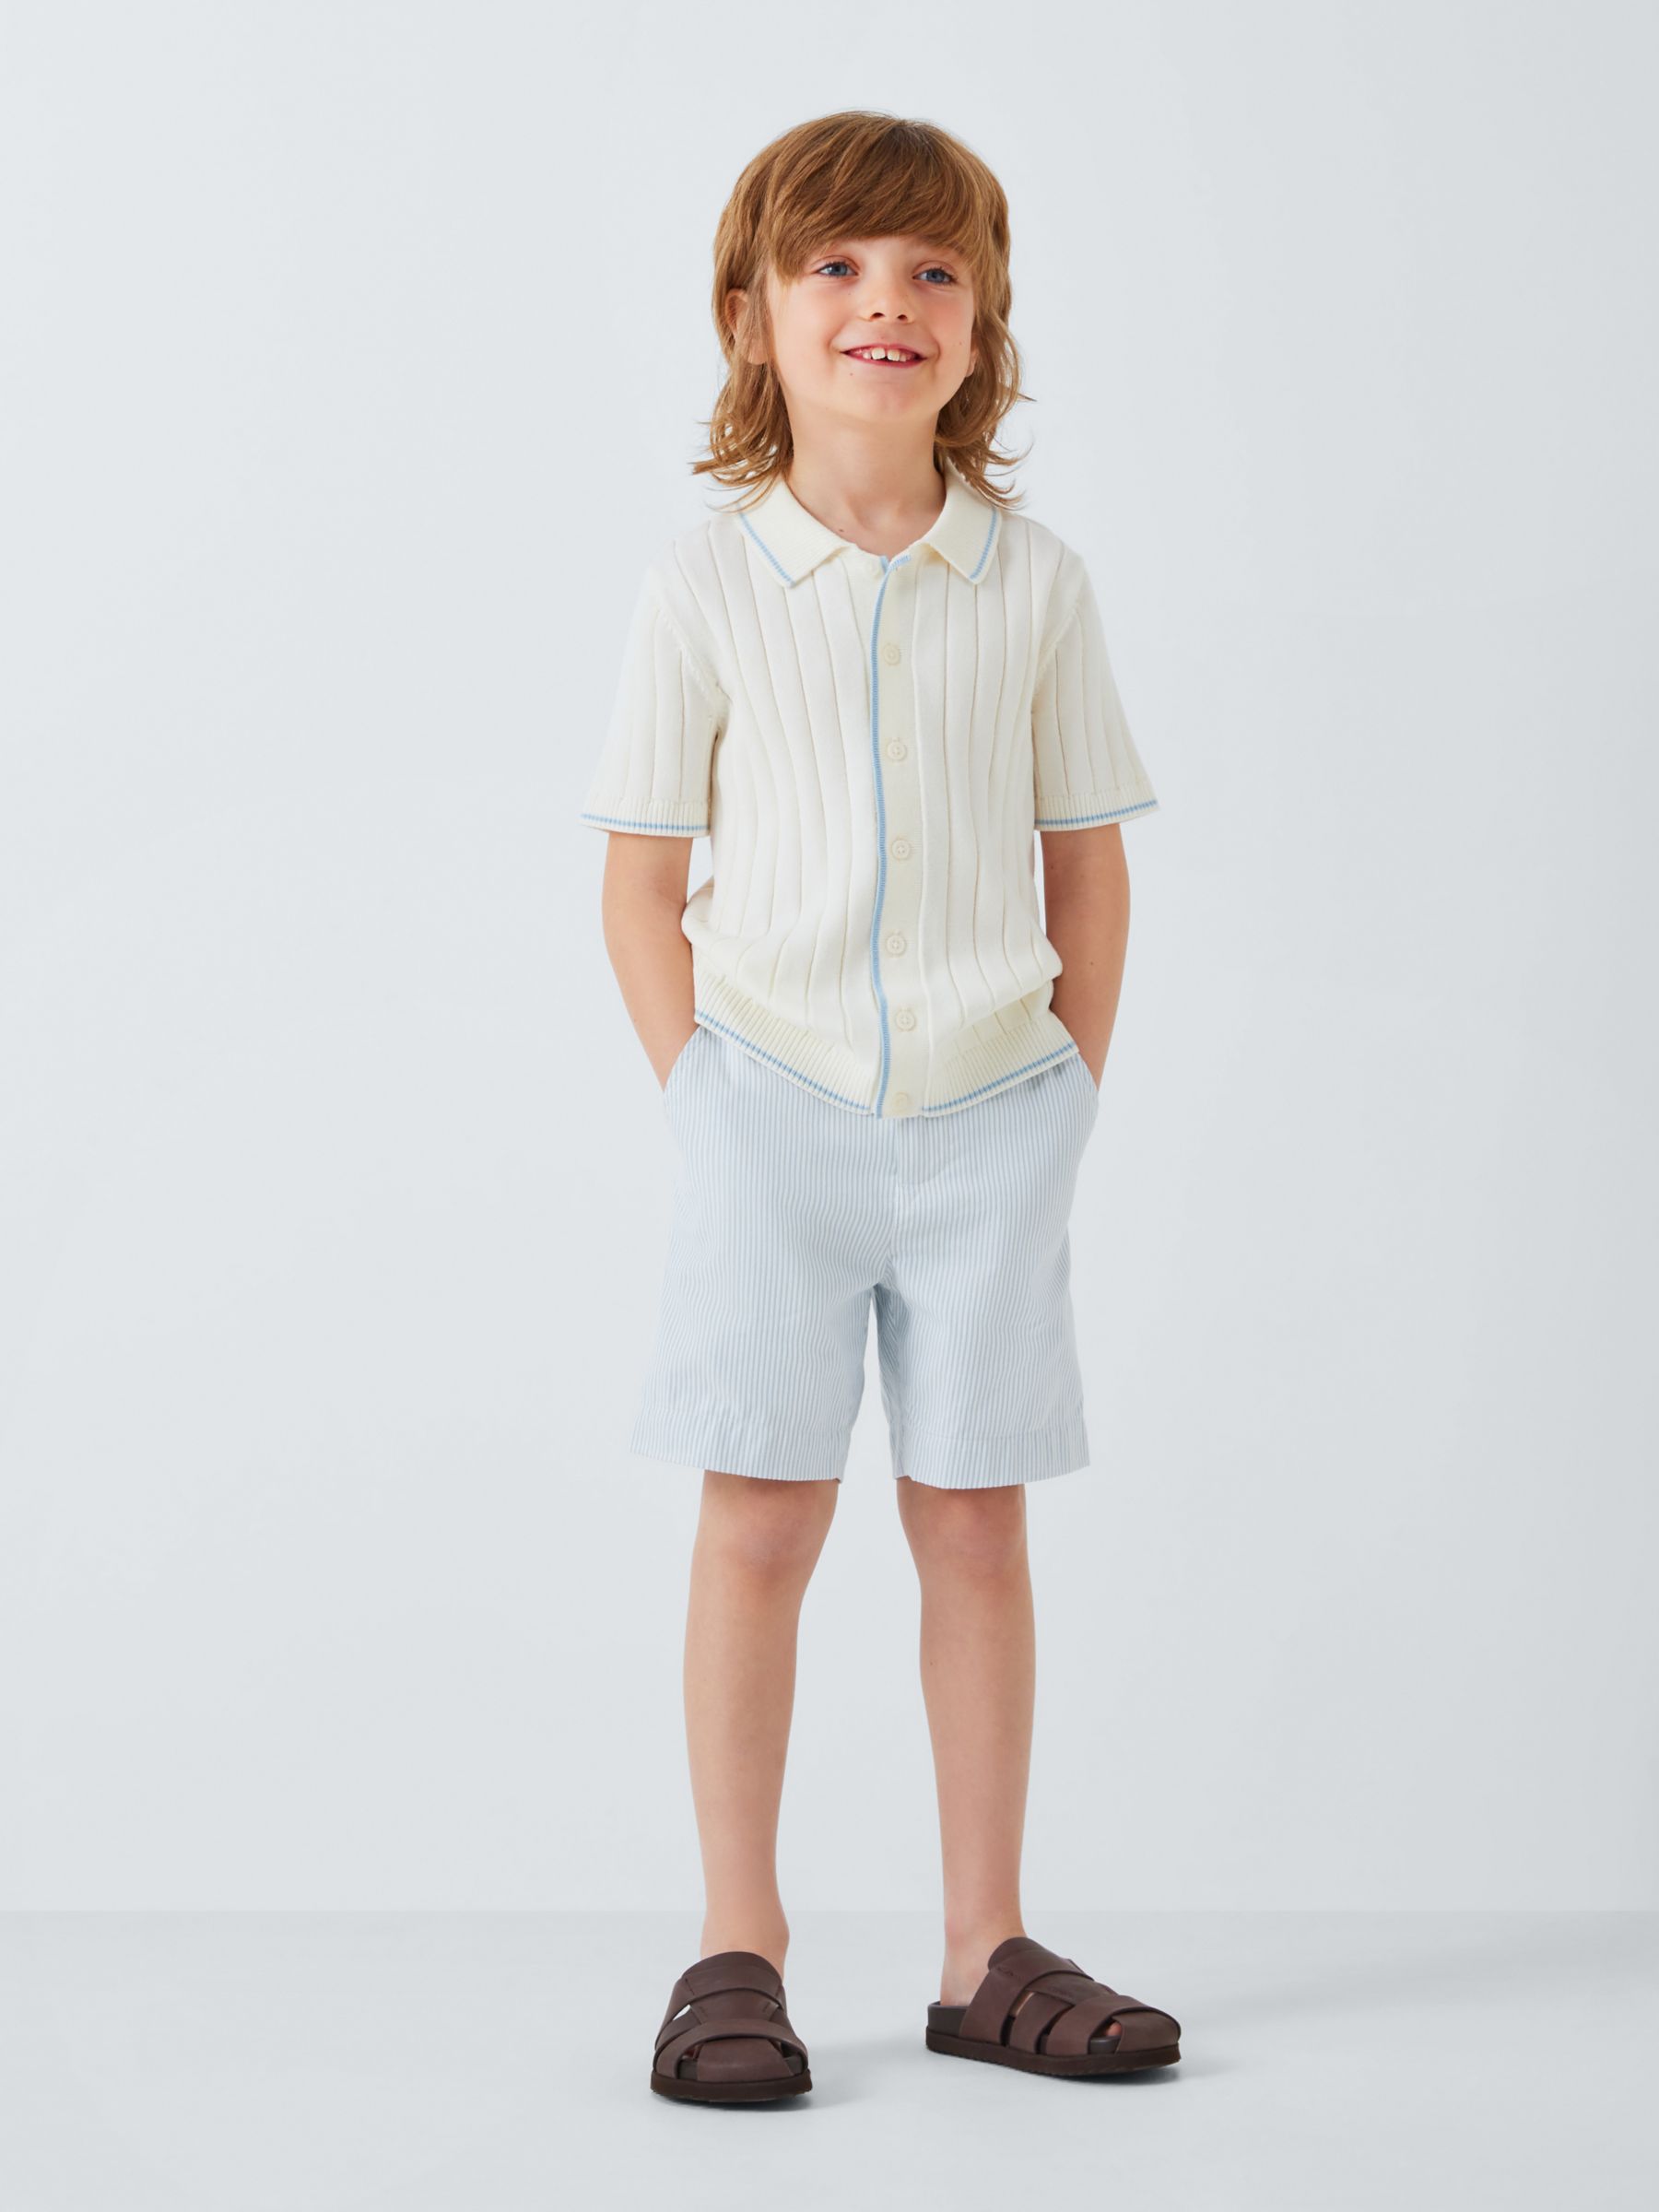 Buy John Lewis Heirloom Collection Kids' Ticking Stripe Shorts, Blue/White Online at johnlewis.com